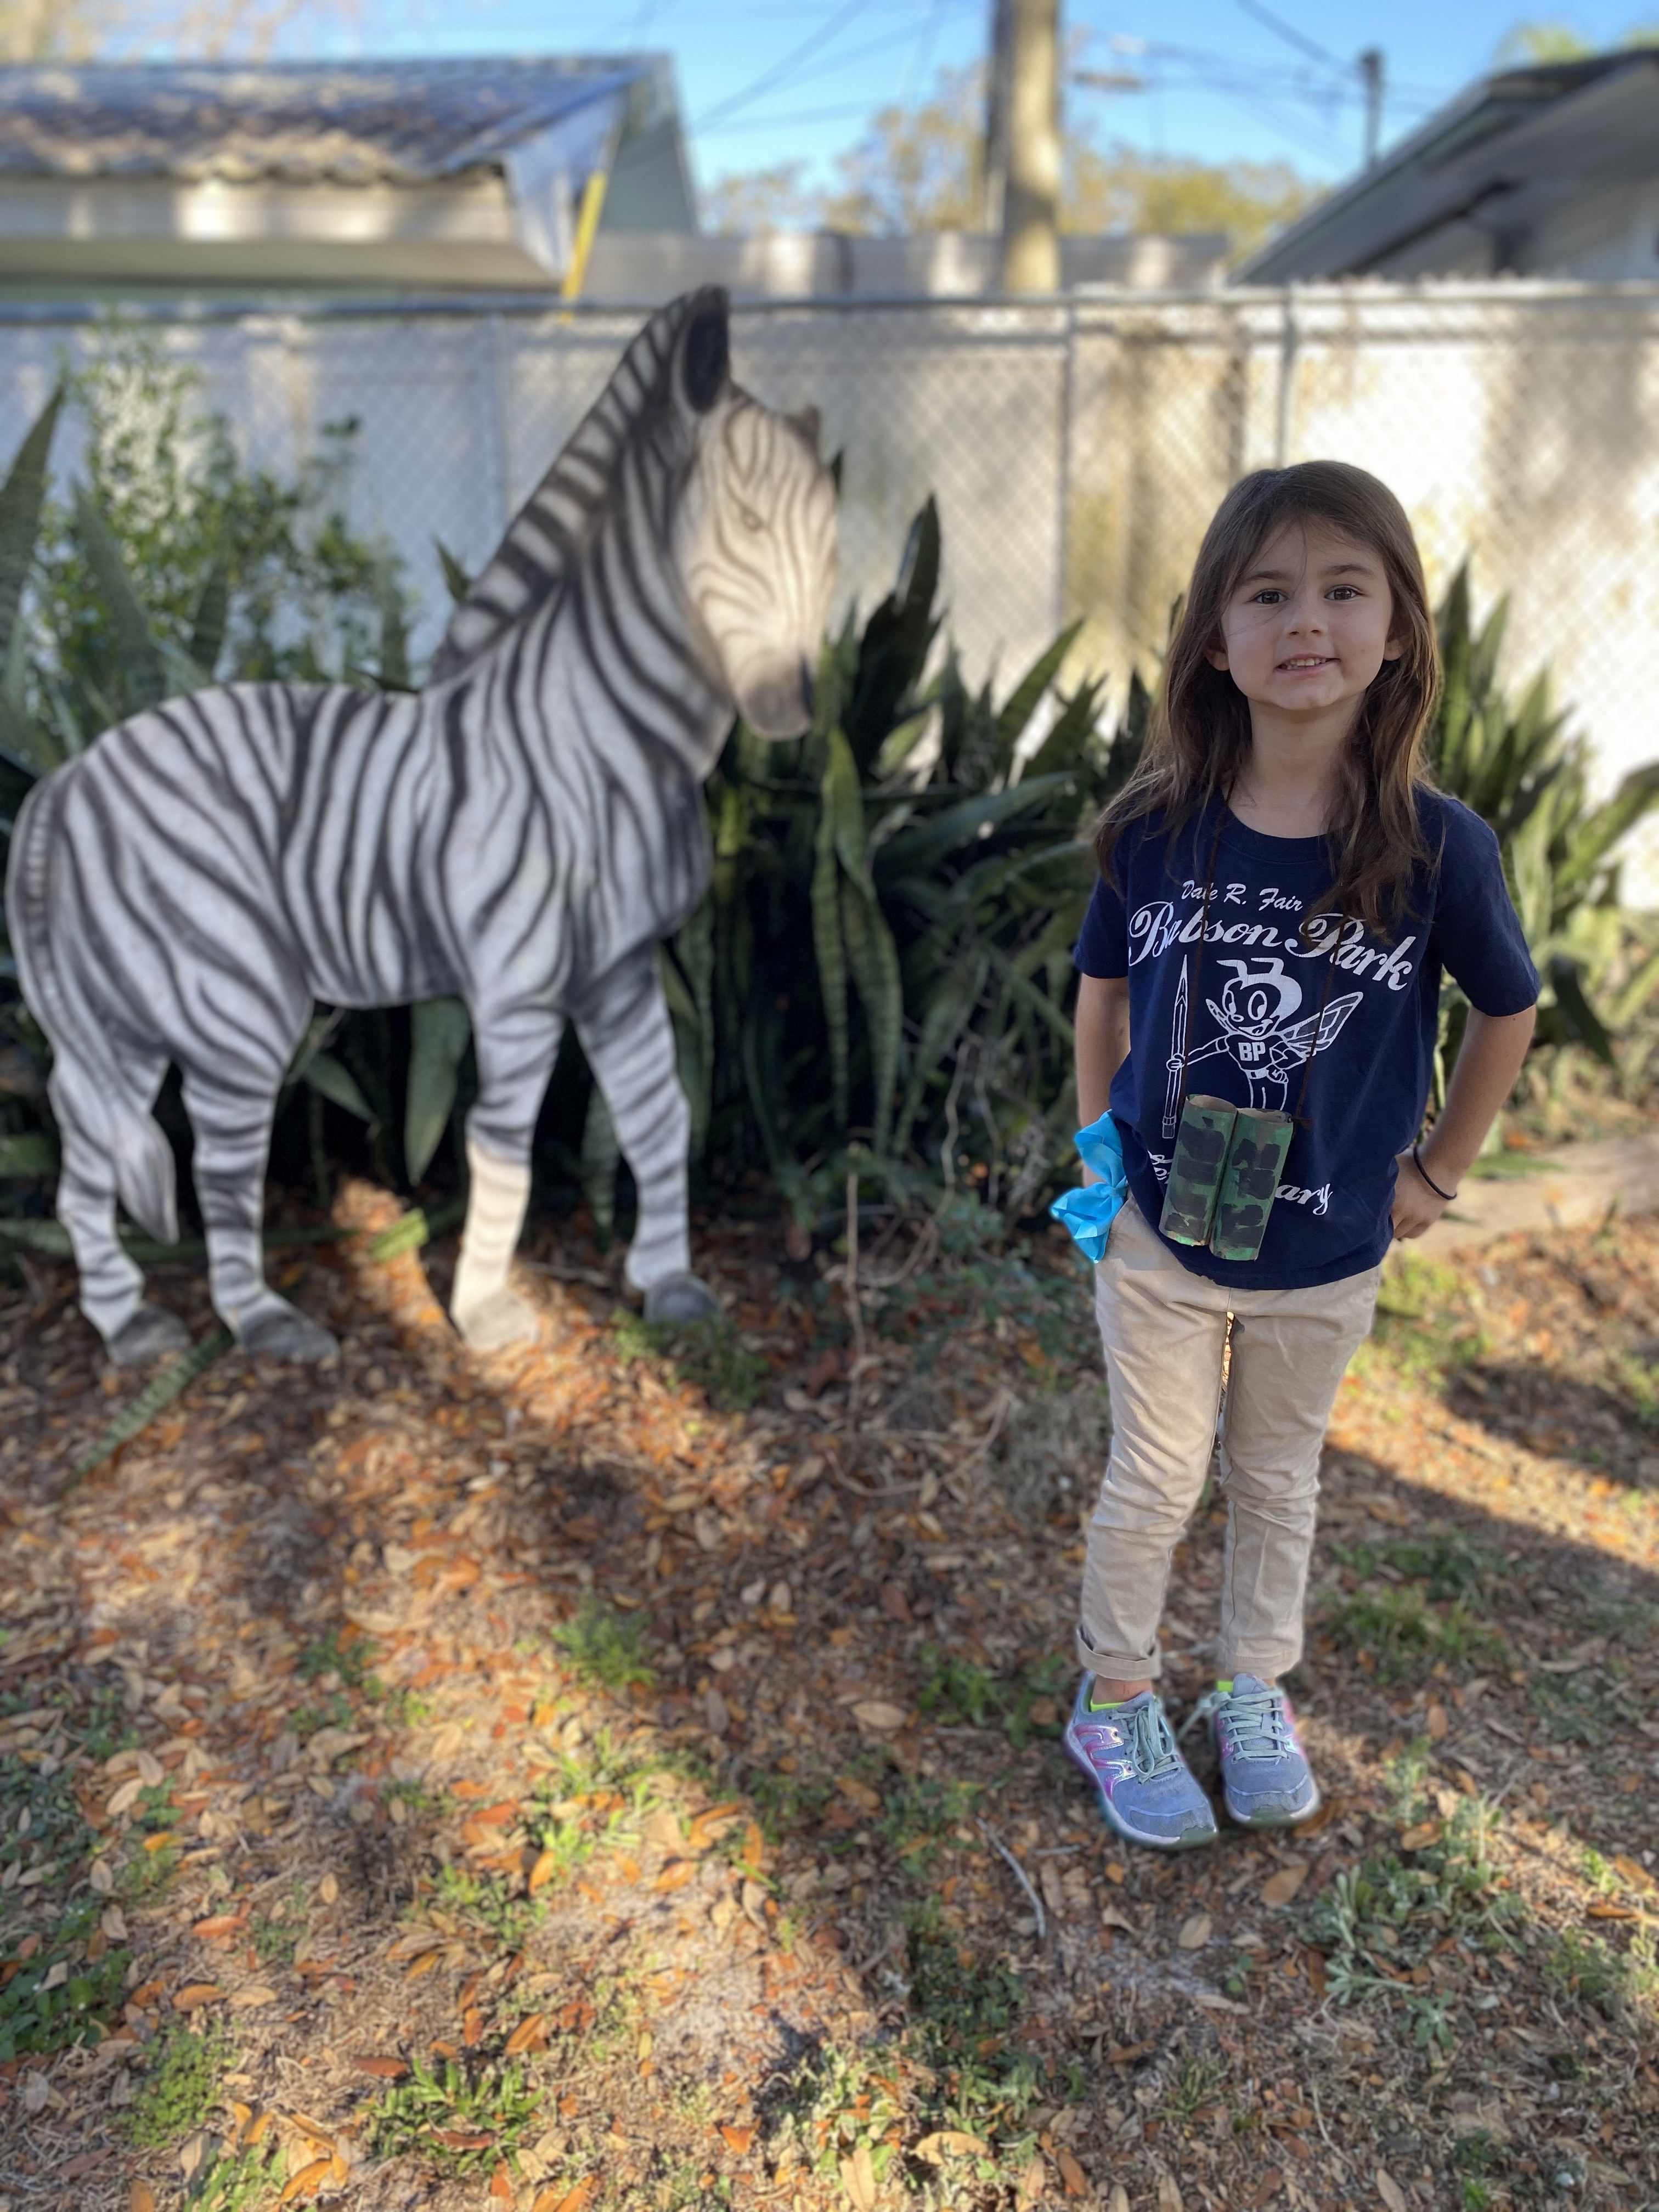 Kindergarten students on a safari with a zebra.